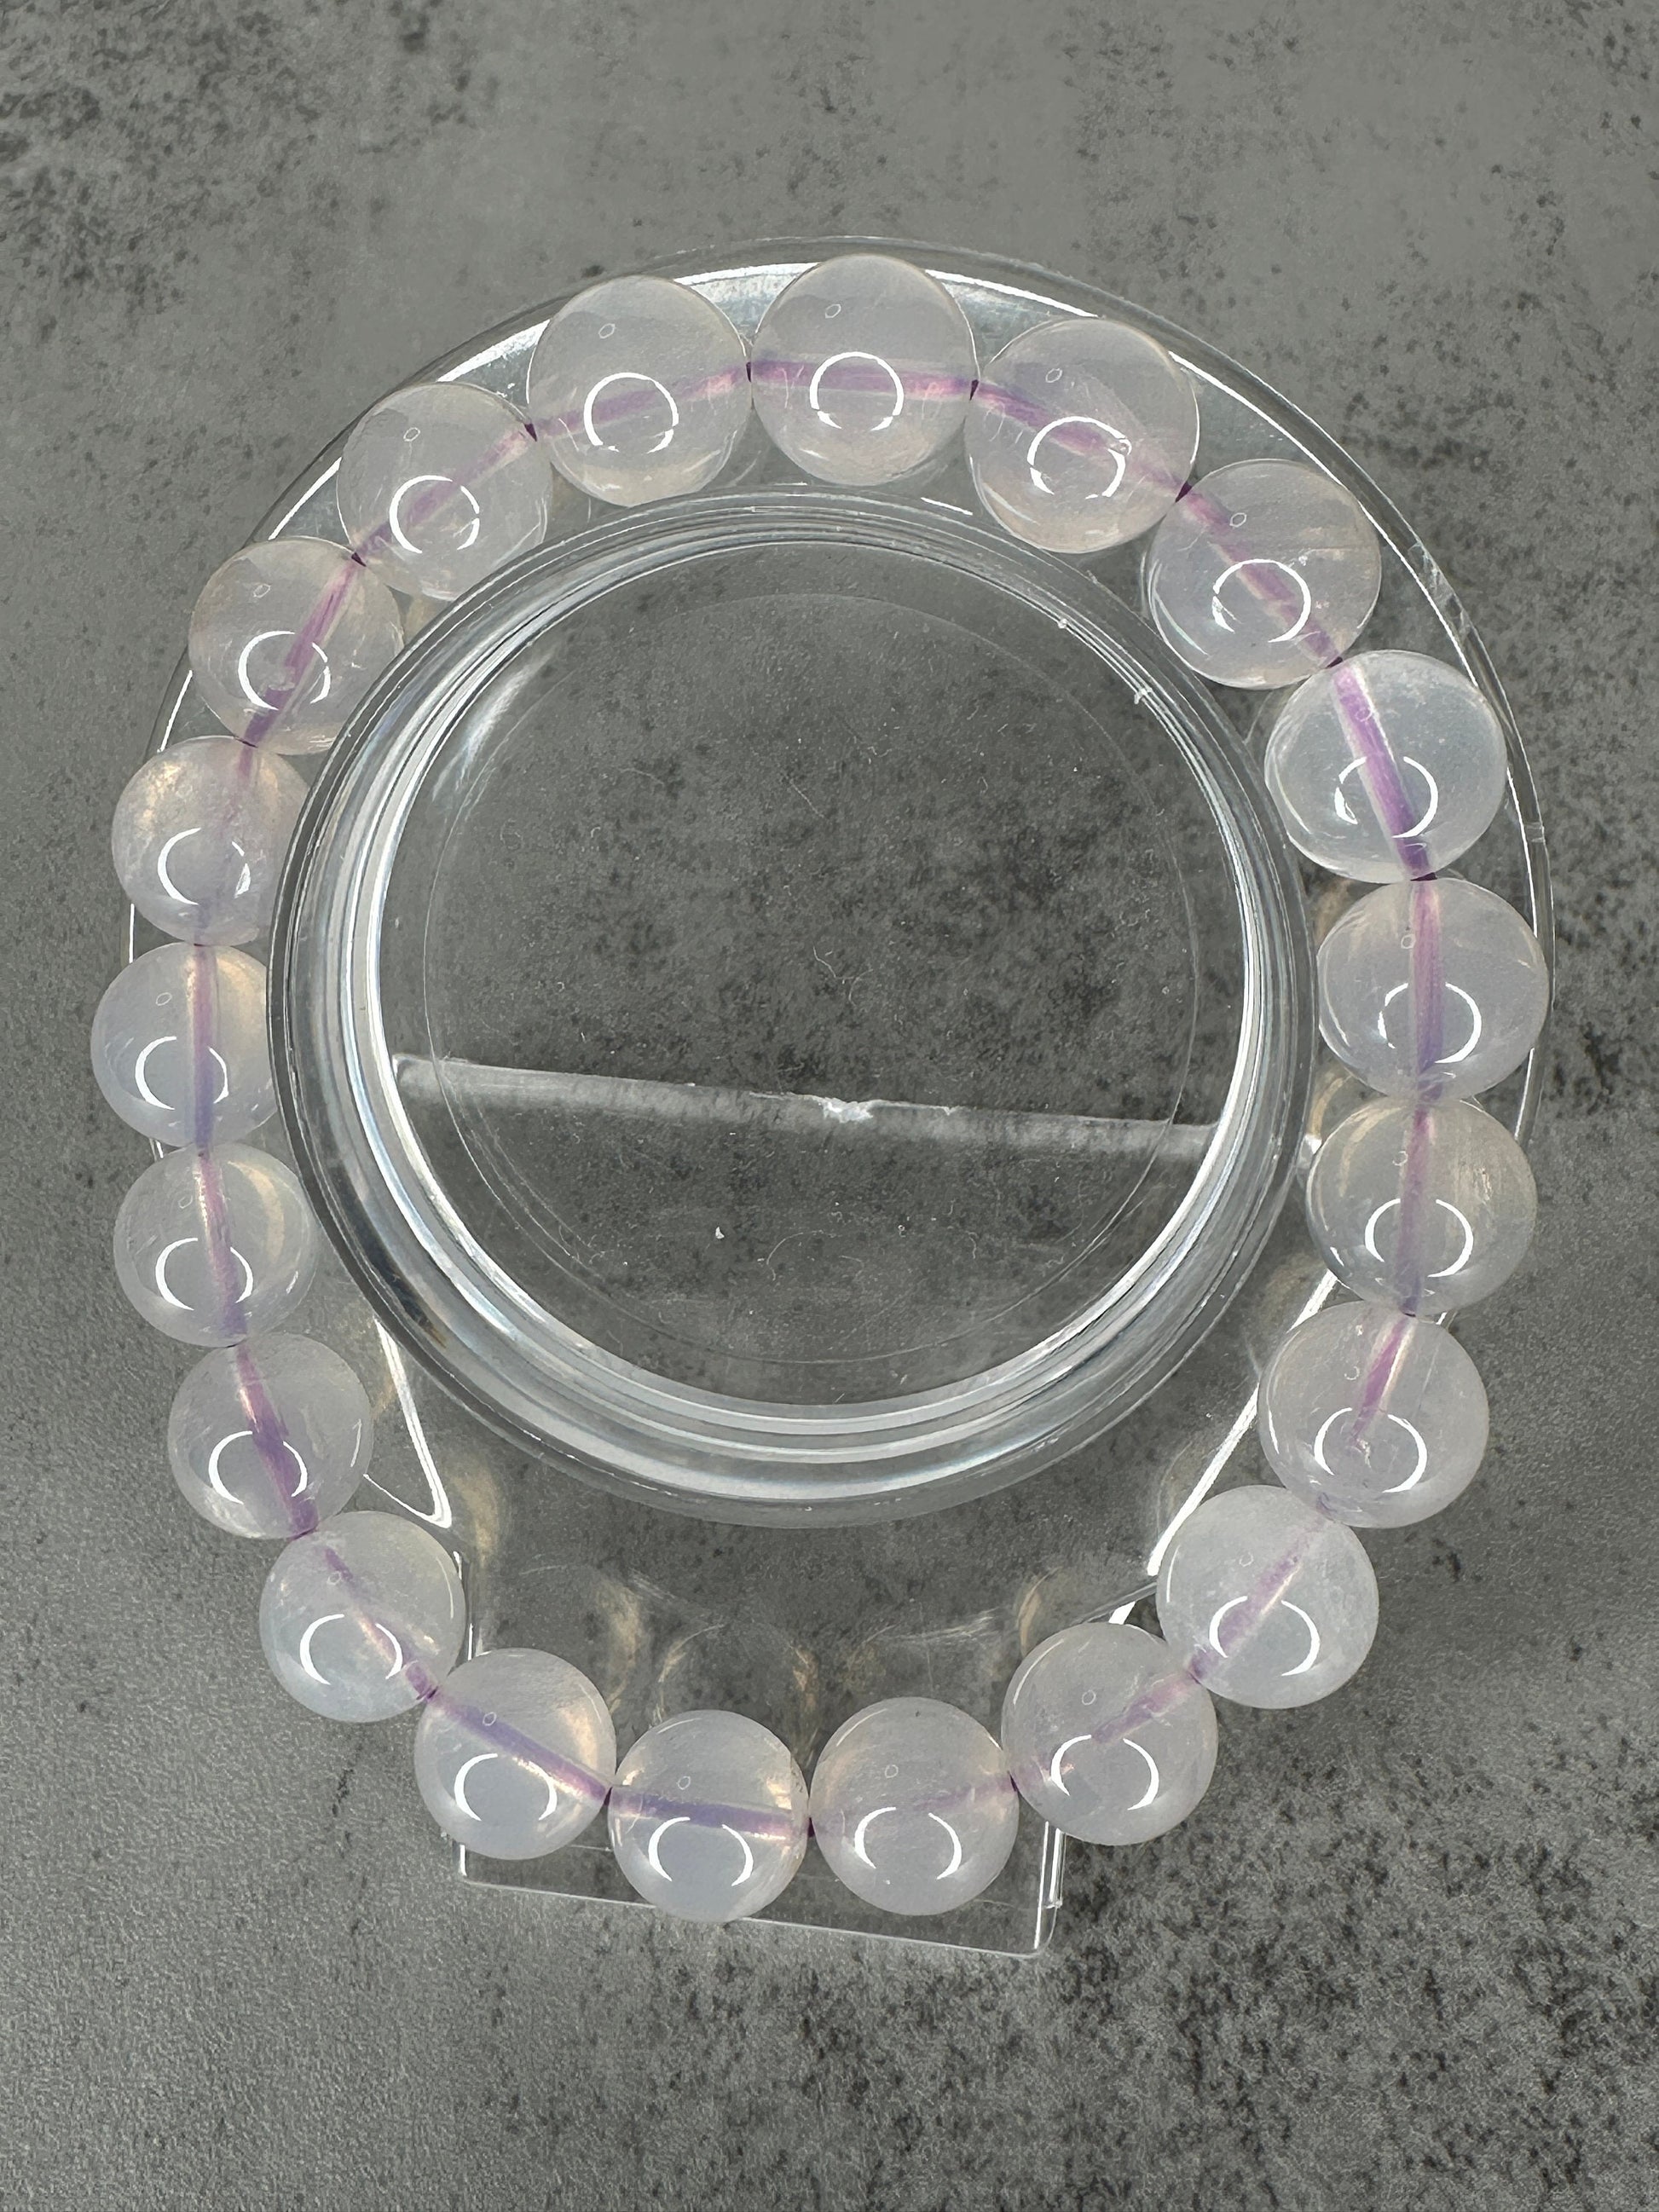 Gorgeous Lavender Moon Quartz Bracelet Genuine High-Quality Crystal With Girasol In 10.7mm